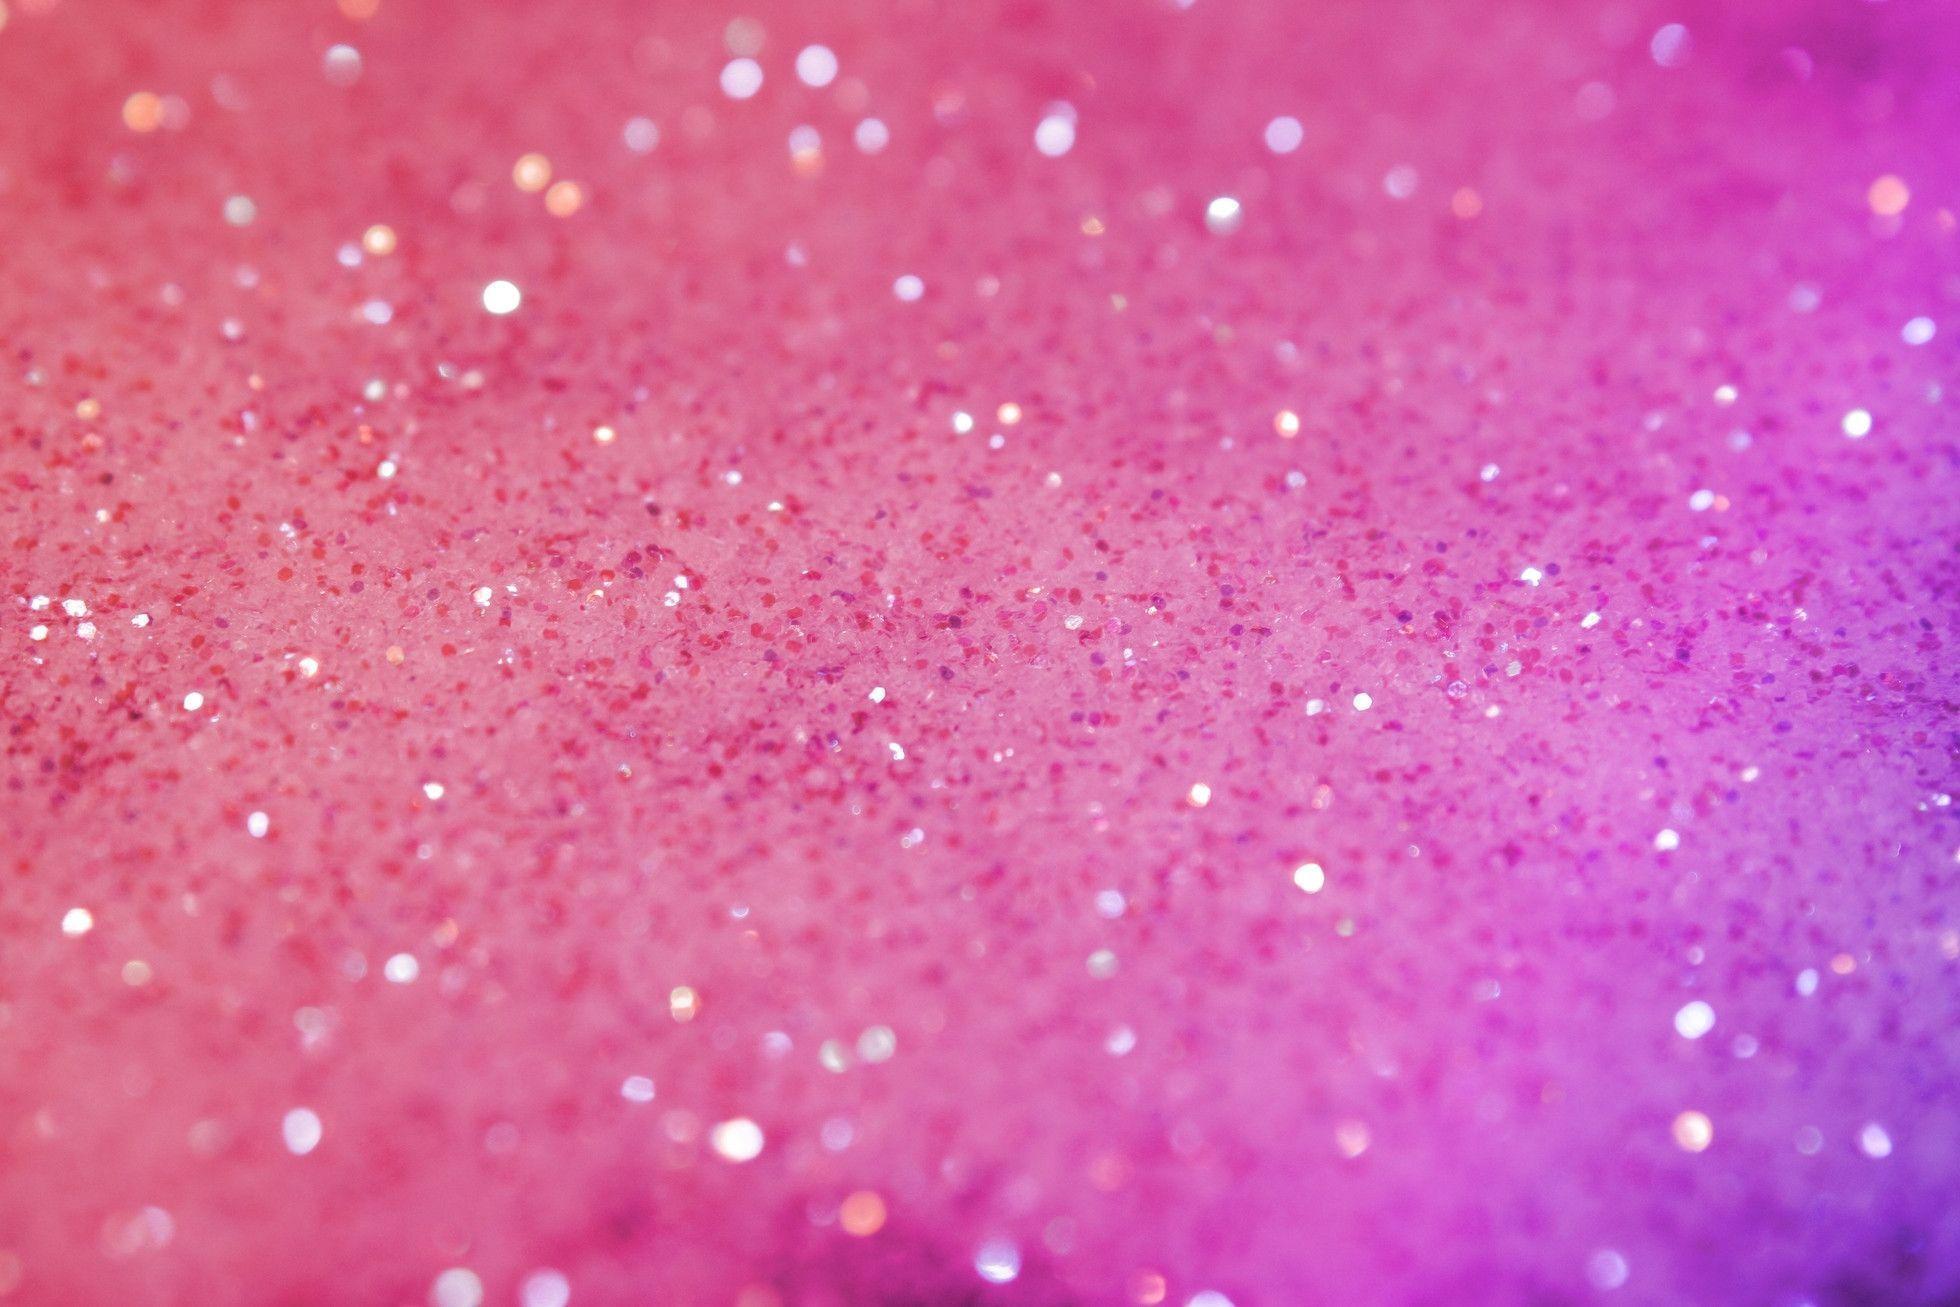 Glittery Baby Pink 310255 Image HD Wallpaper. Wallfoy.com